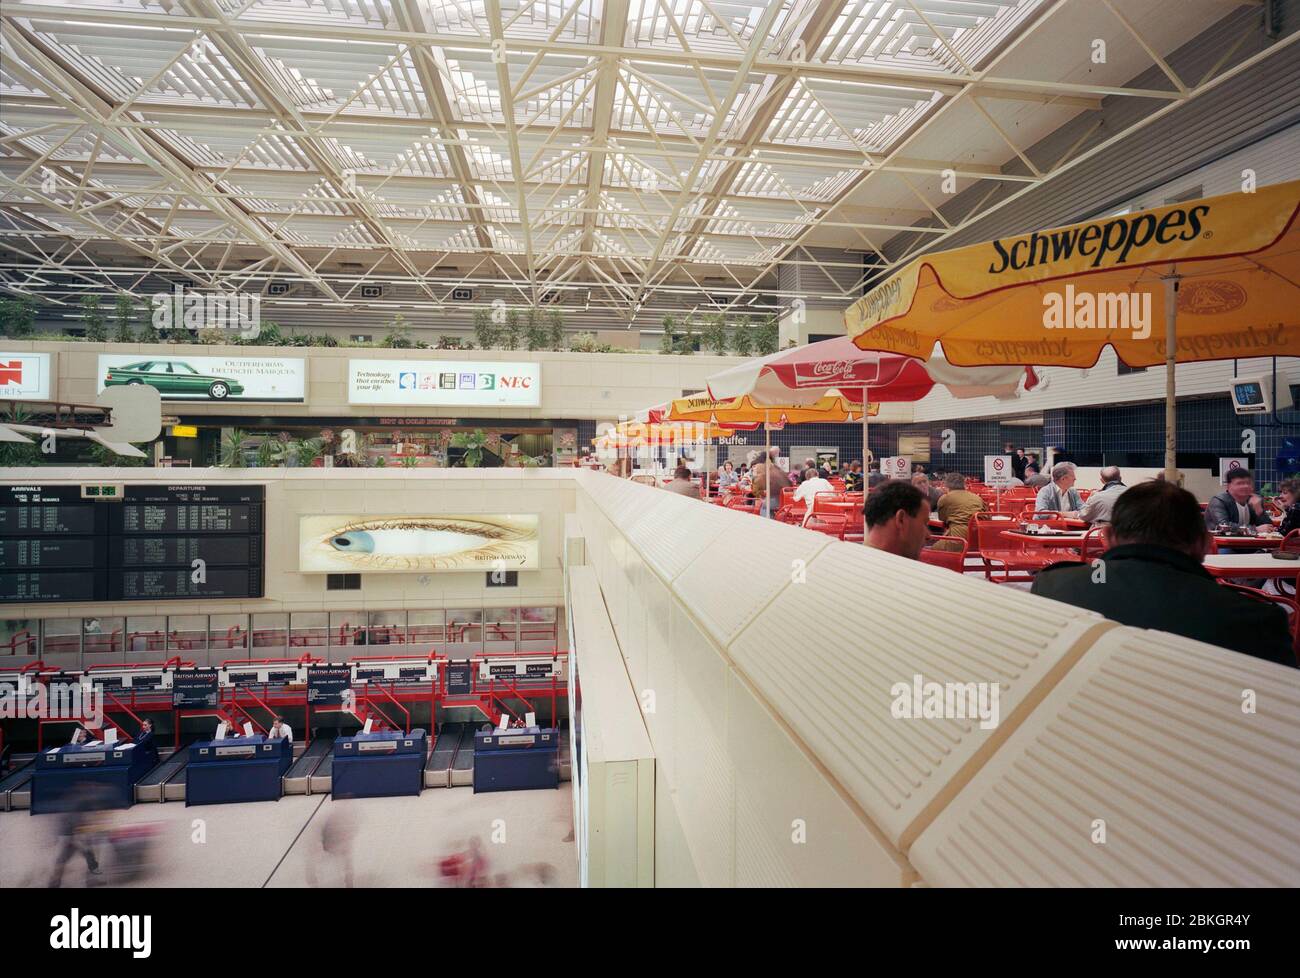 1991, then brand new terminal building, Birmingham Airport, West Midlands, England Stock Photo